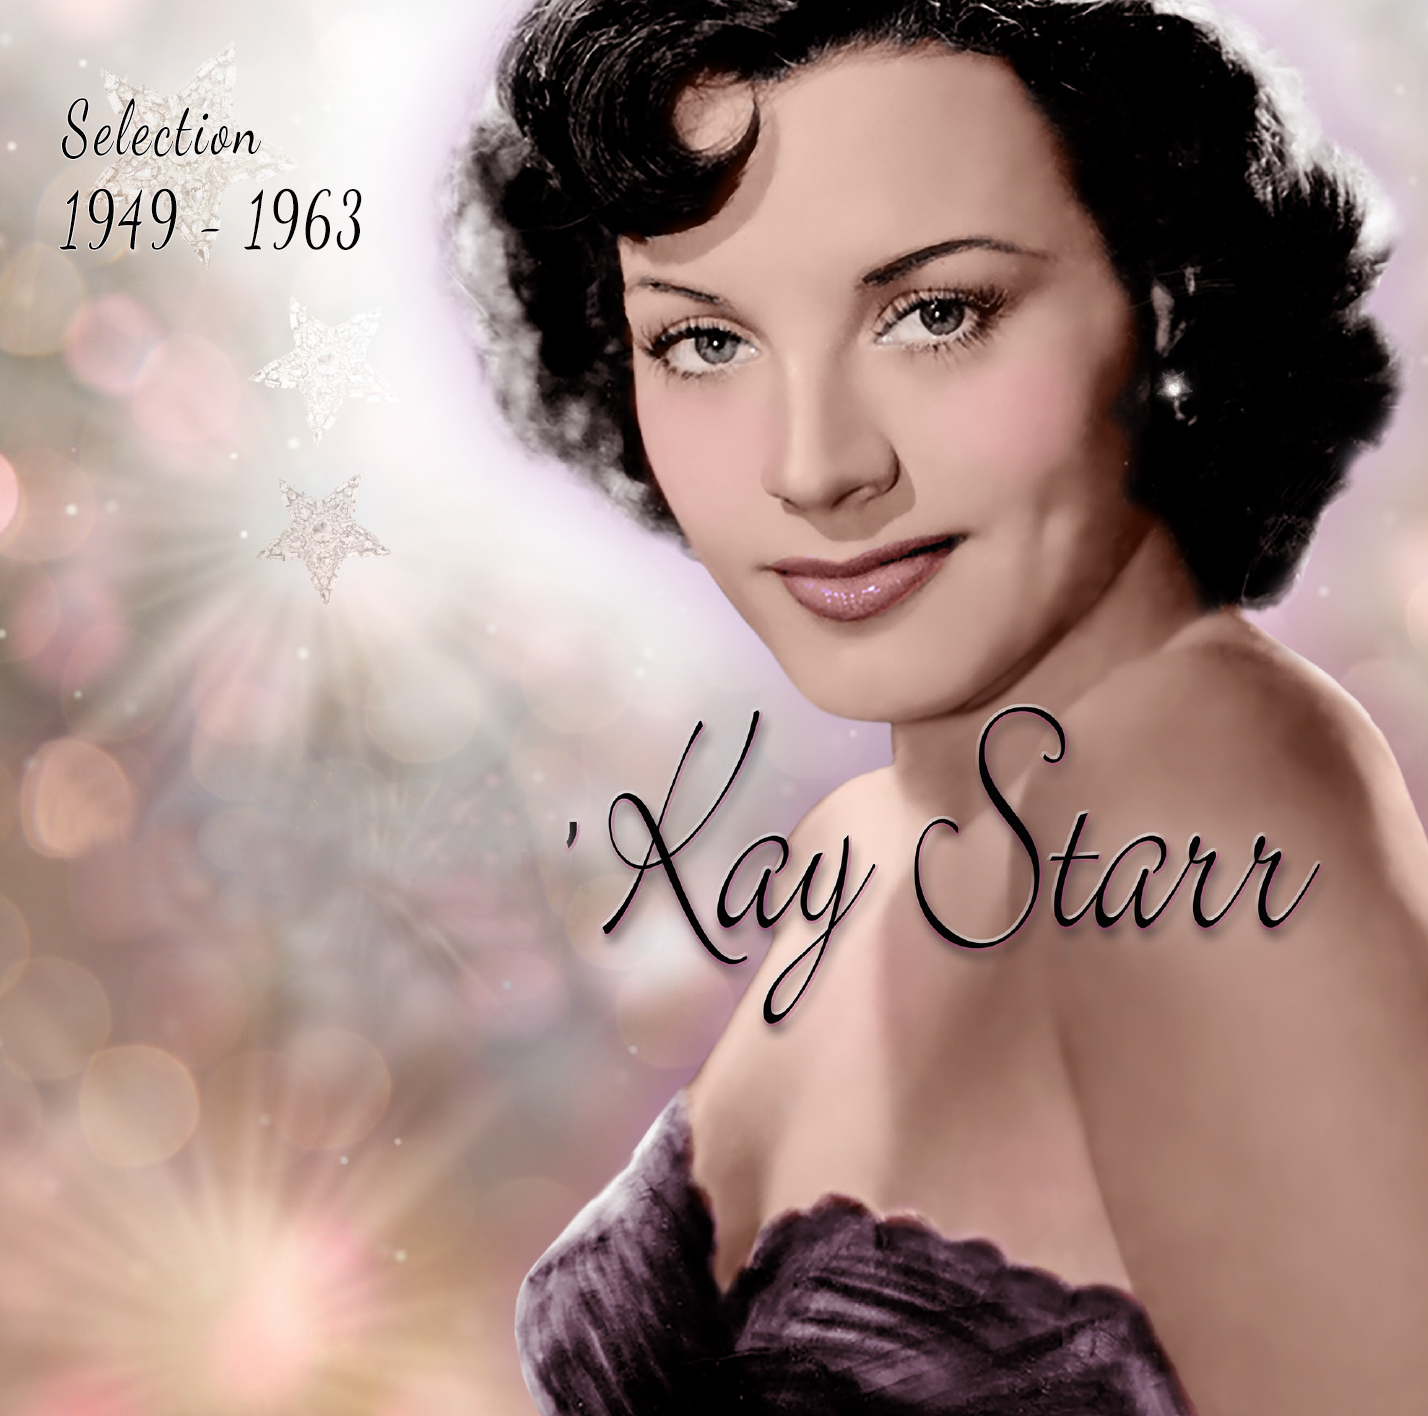 Kay Starr Selection 1949 - 1963